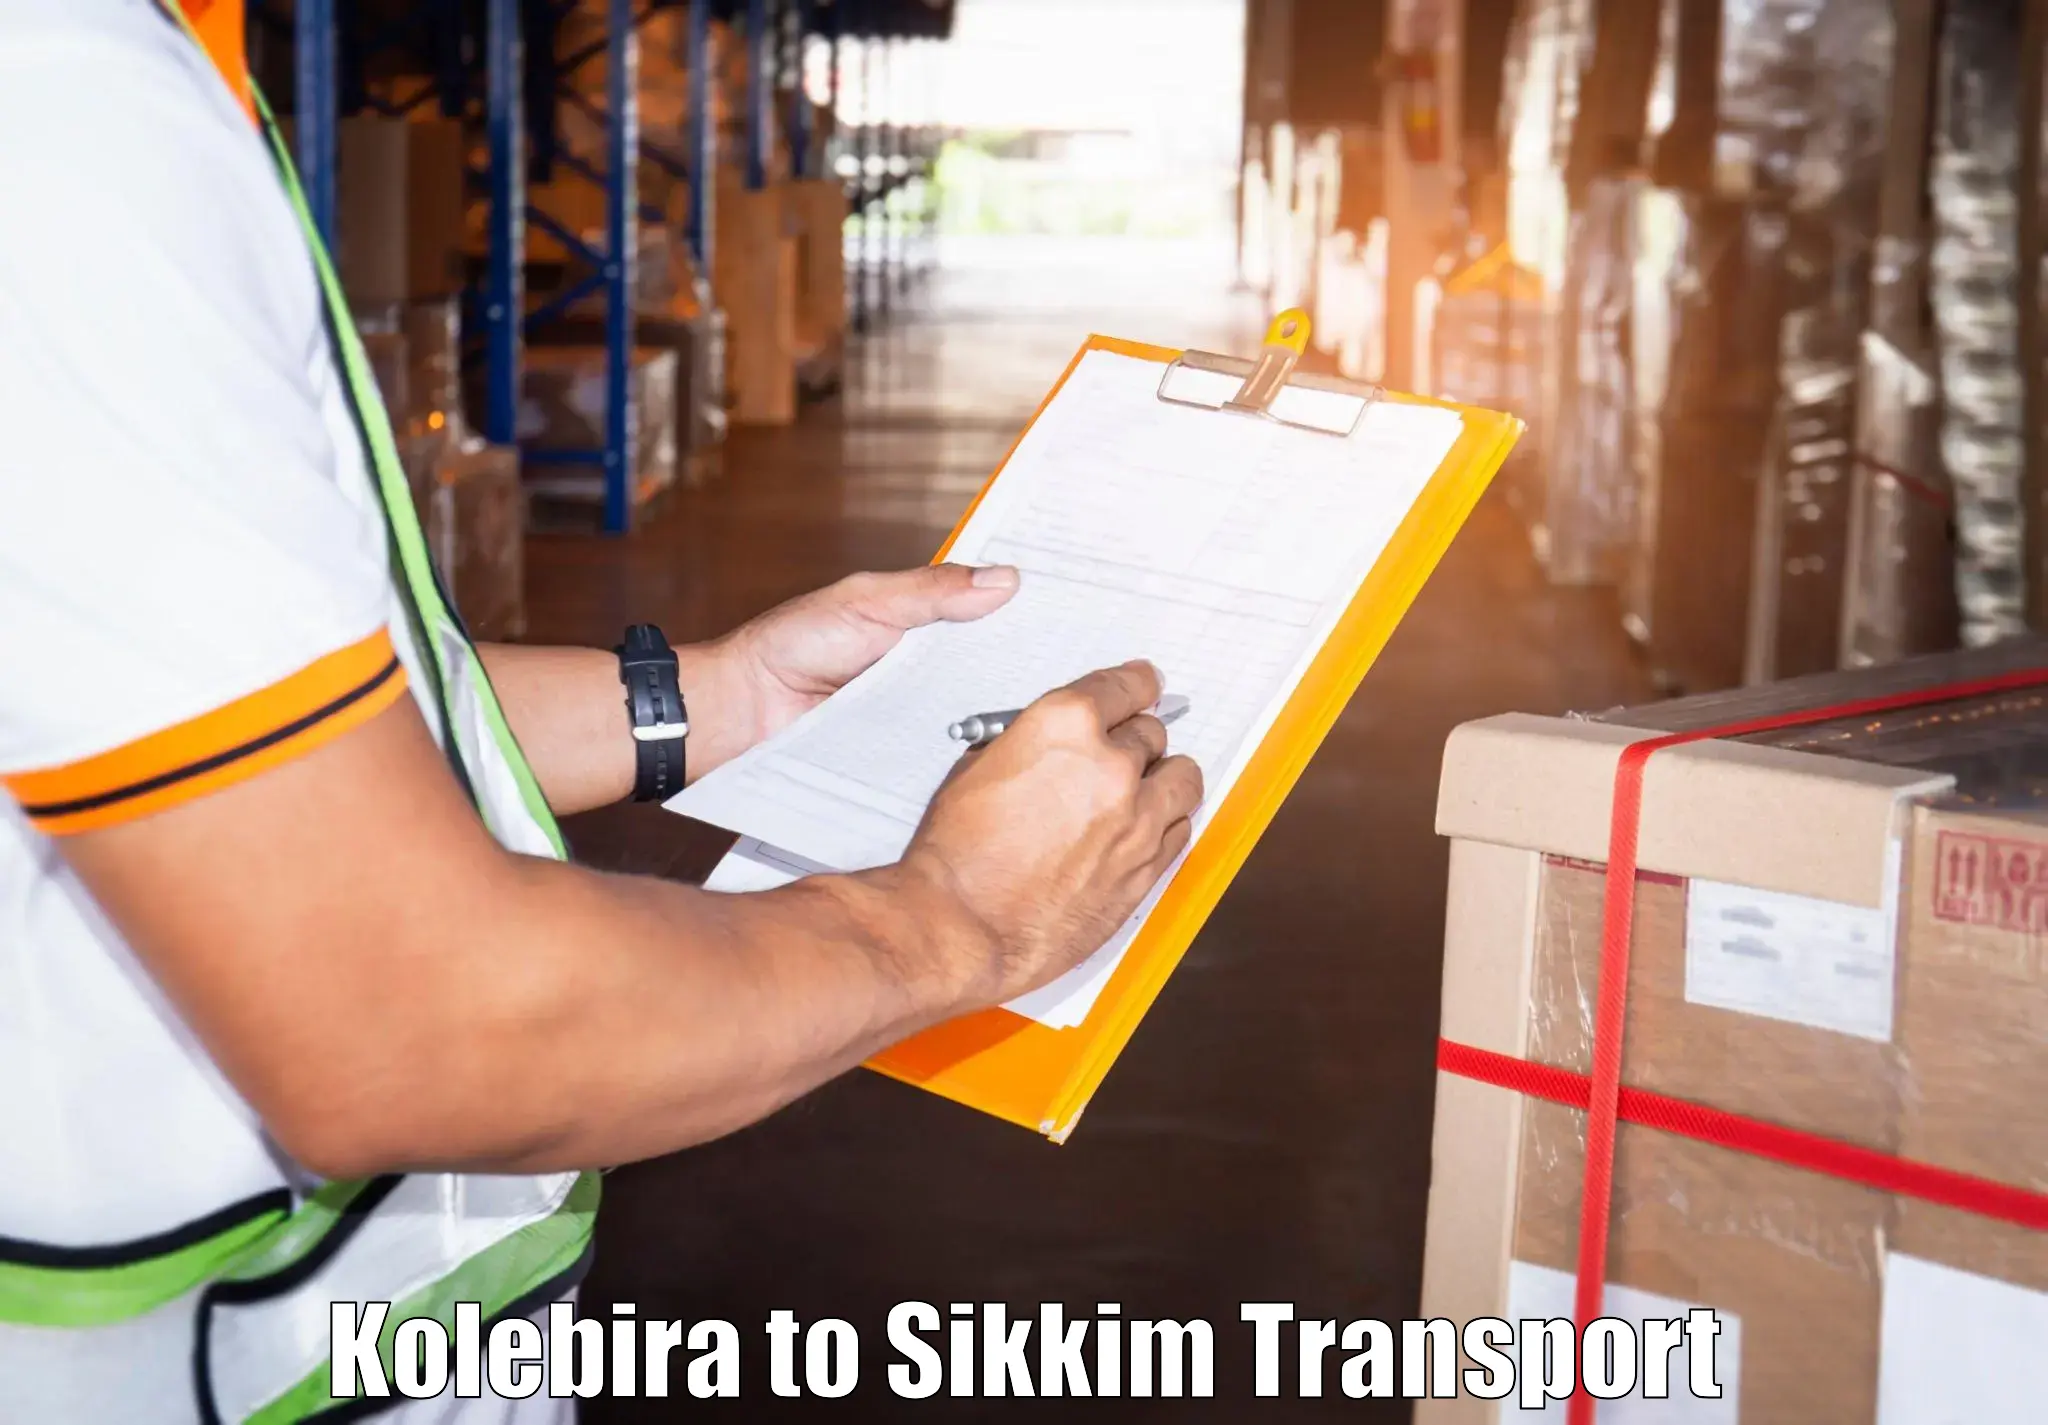 Commercial transport service Kolebira to North Sikkim